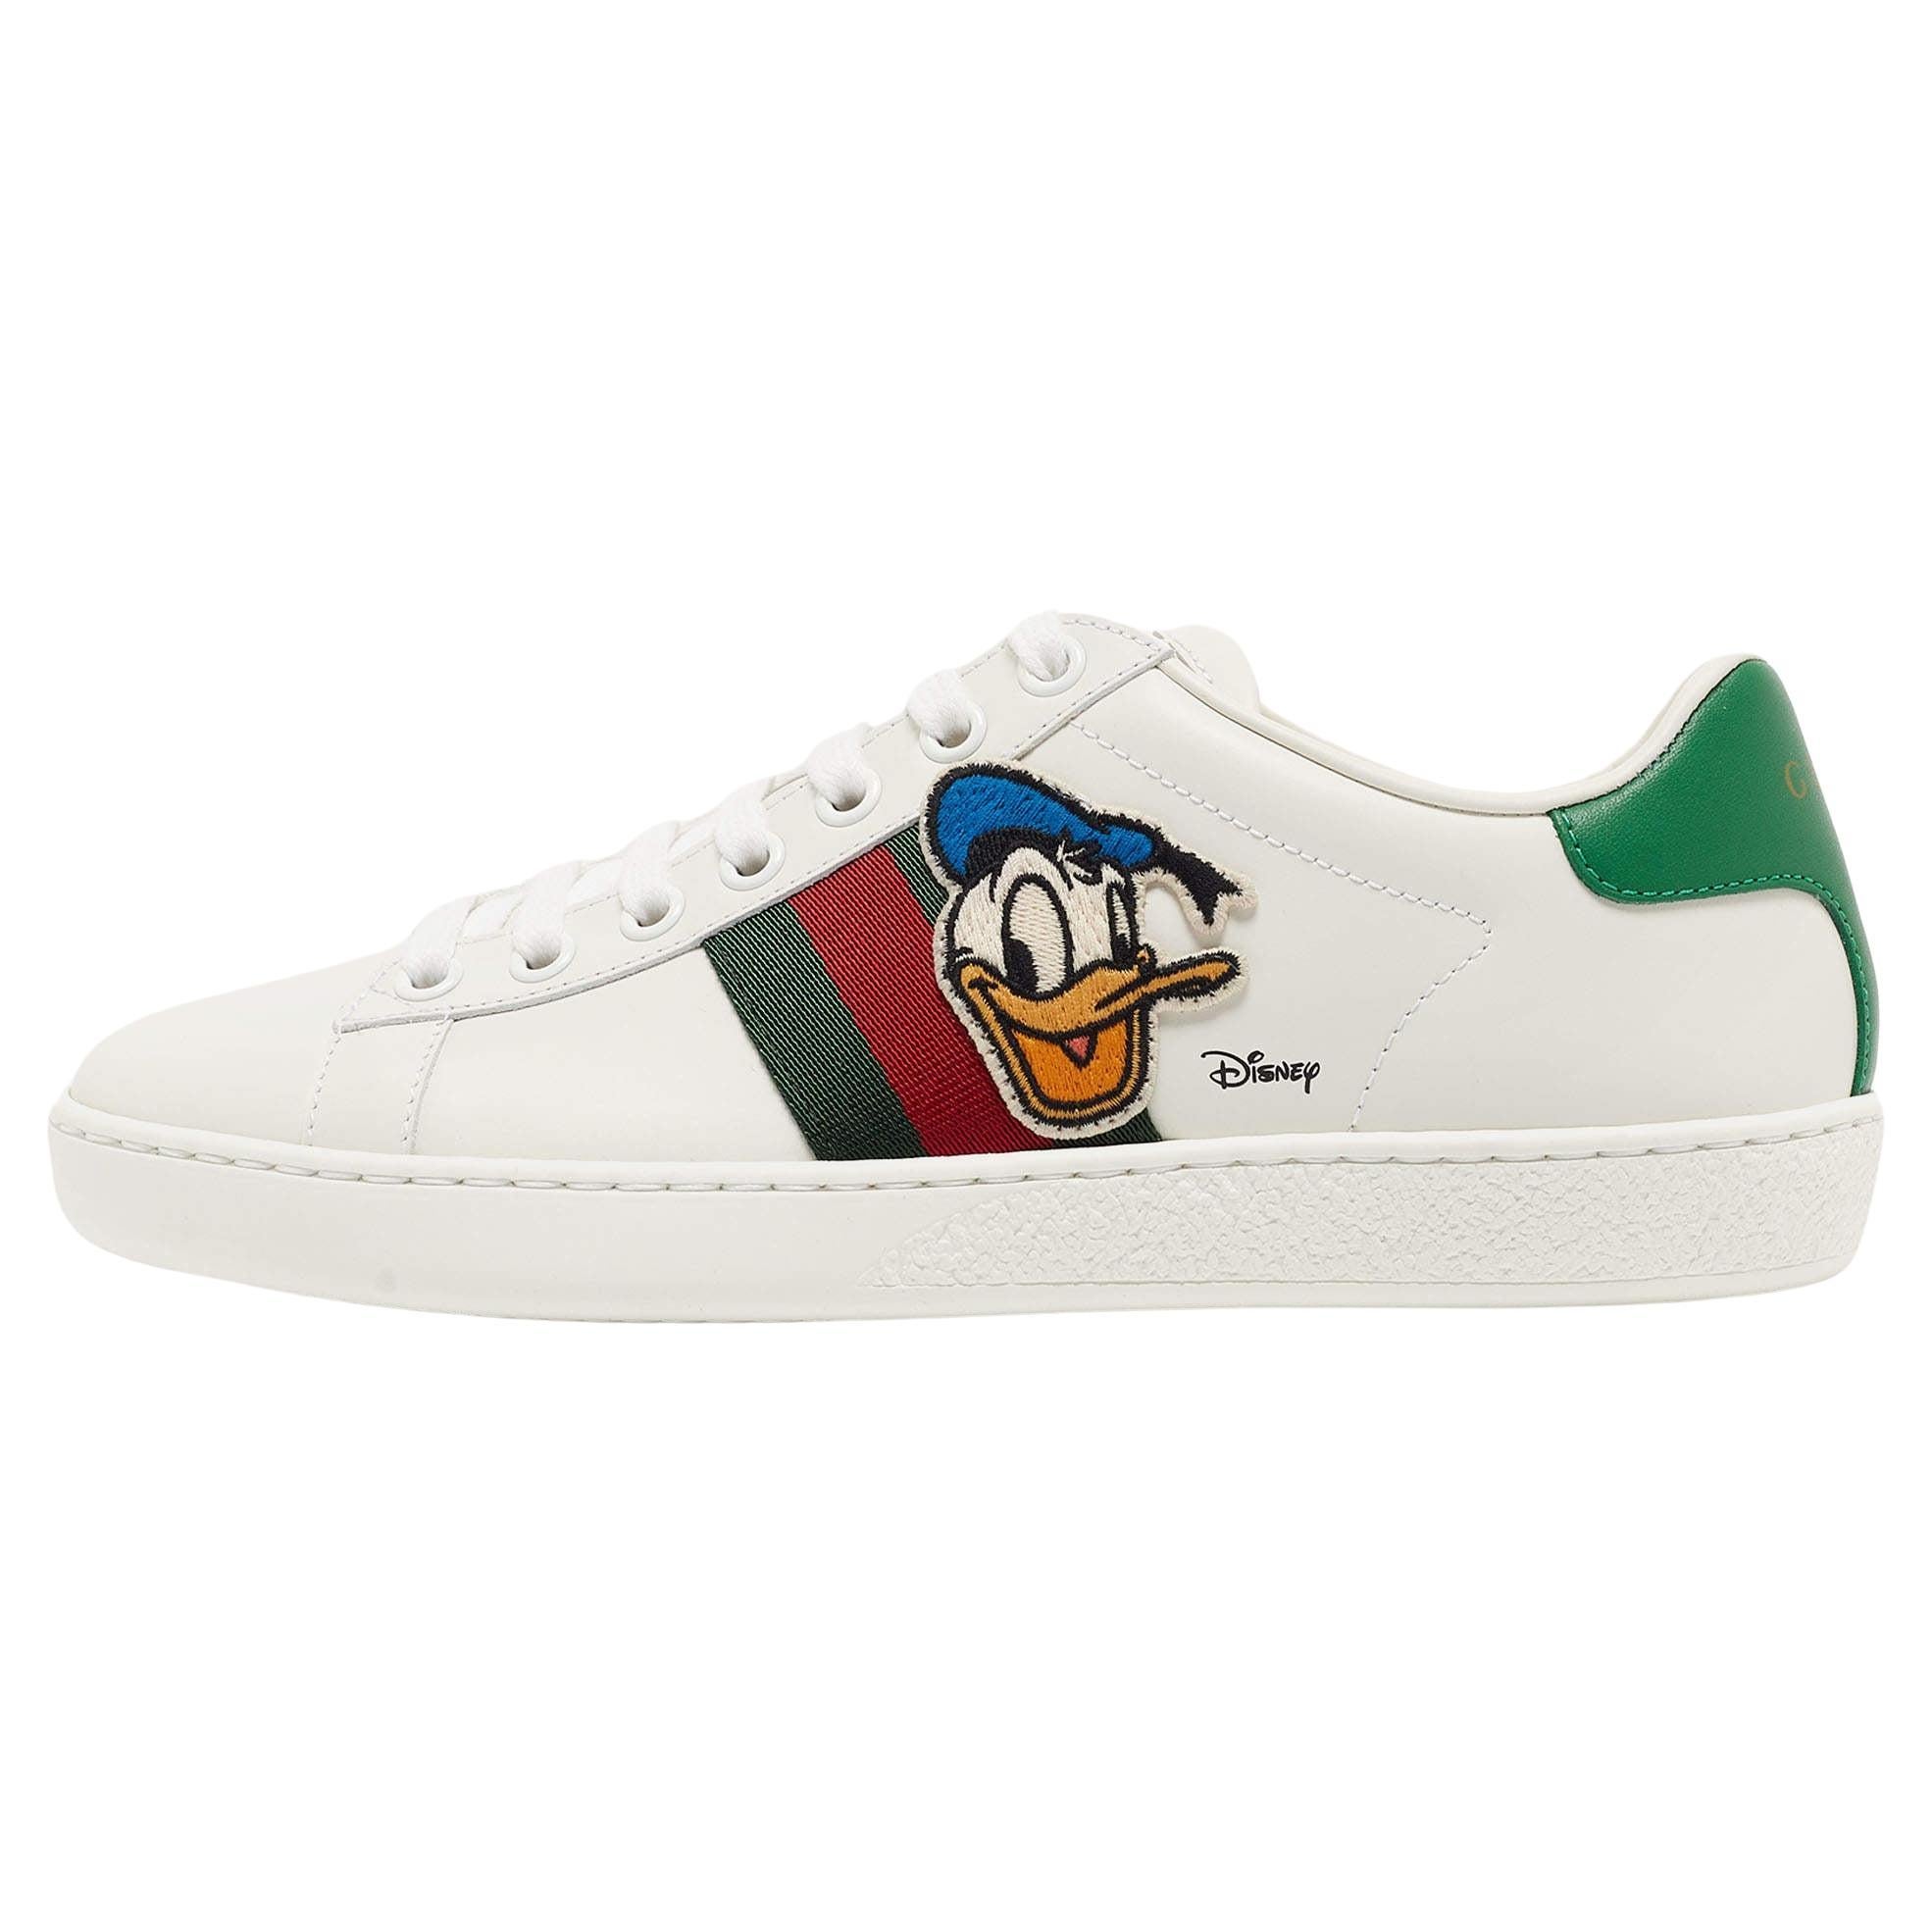 Gucci x Disney Weiße Donald Duck Ace Turnschuhe aus Leder Größe 34,5